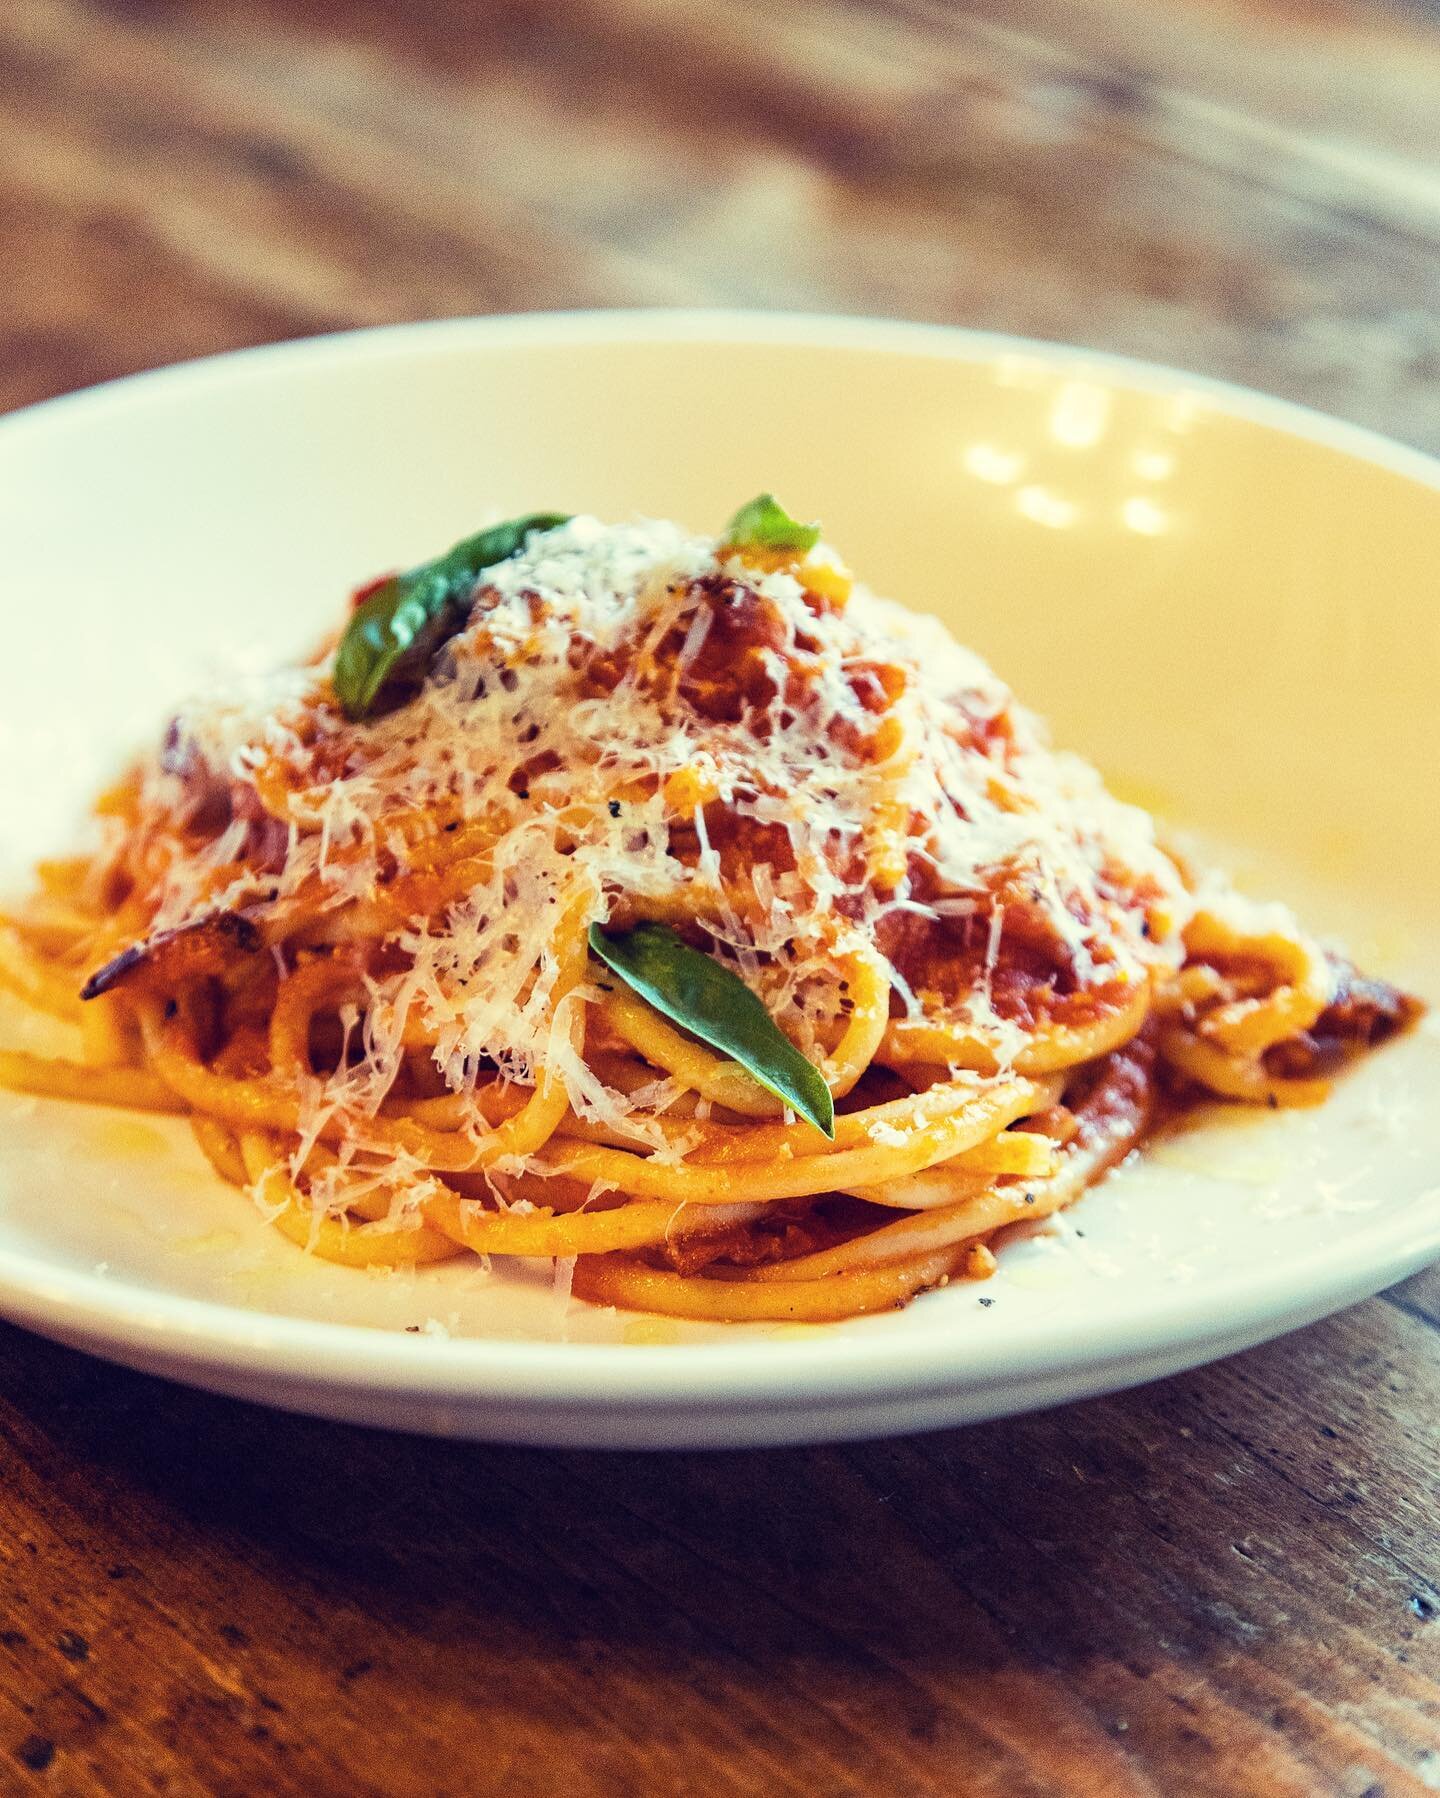 Choose Best Restaurant for Delicious Italian Food